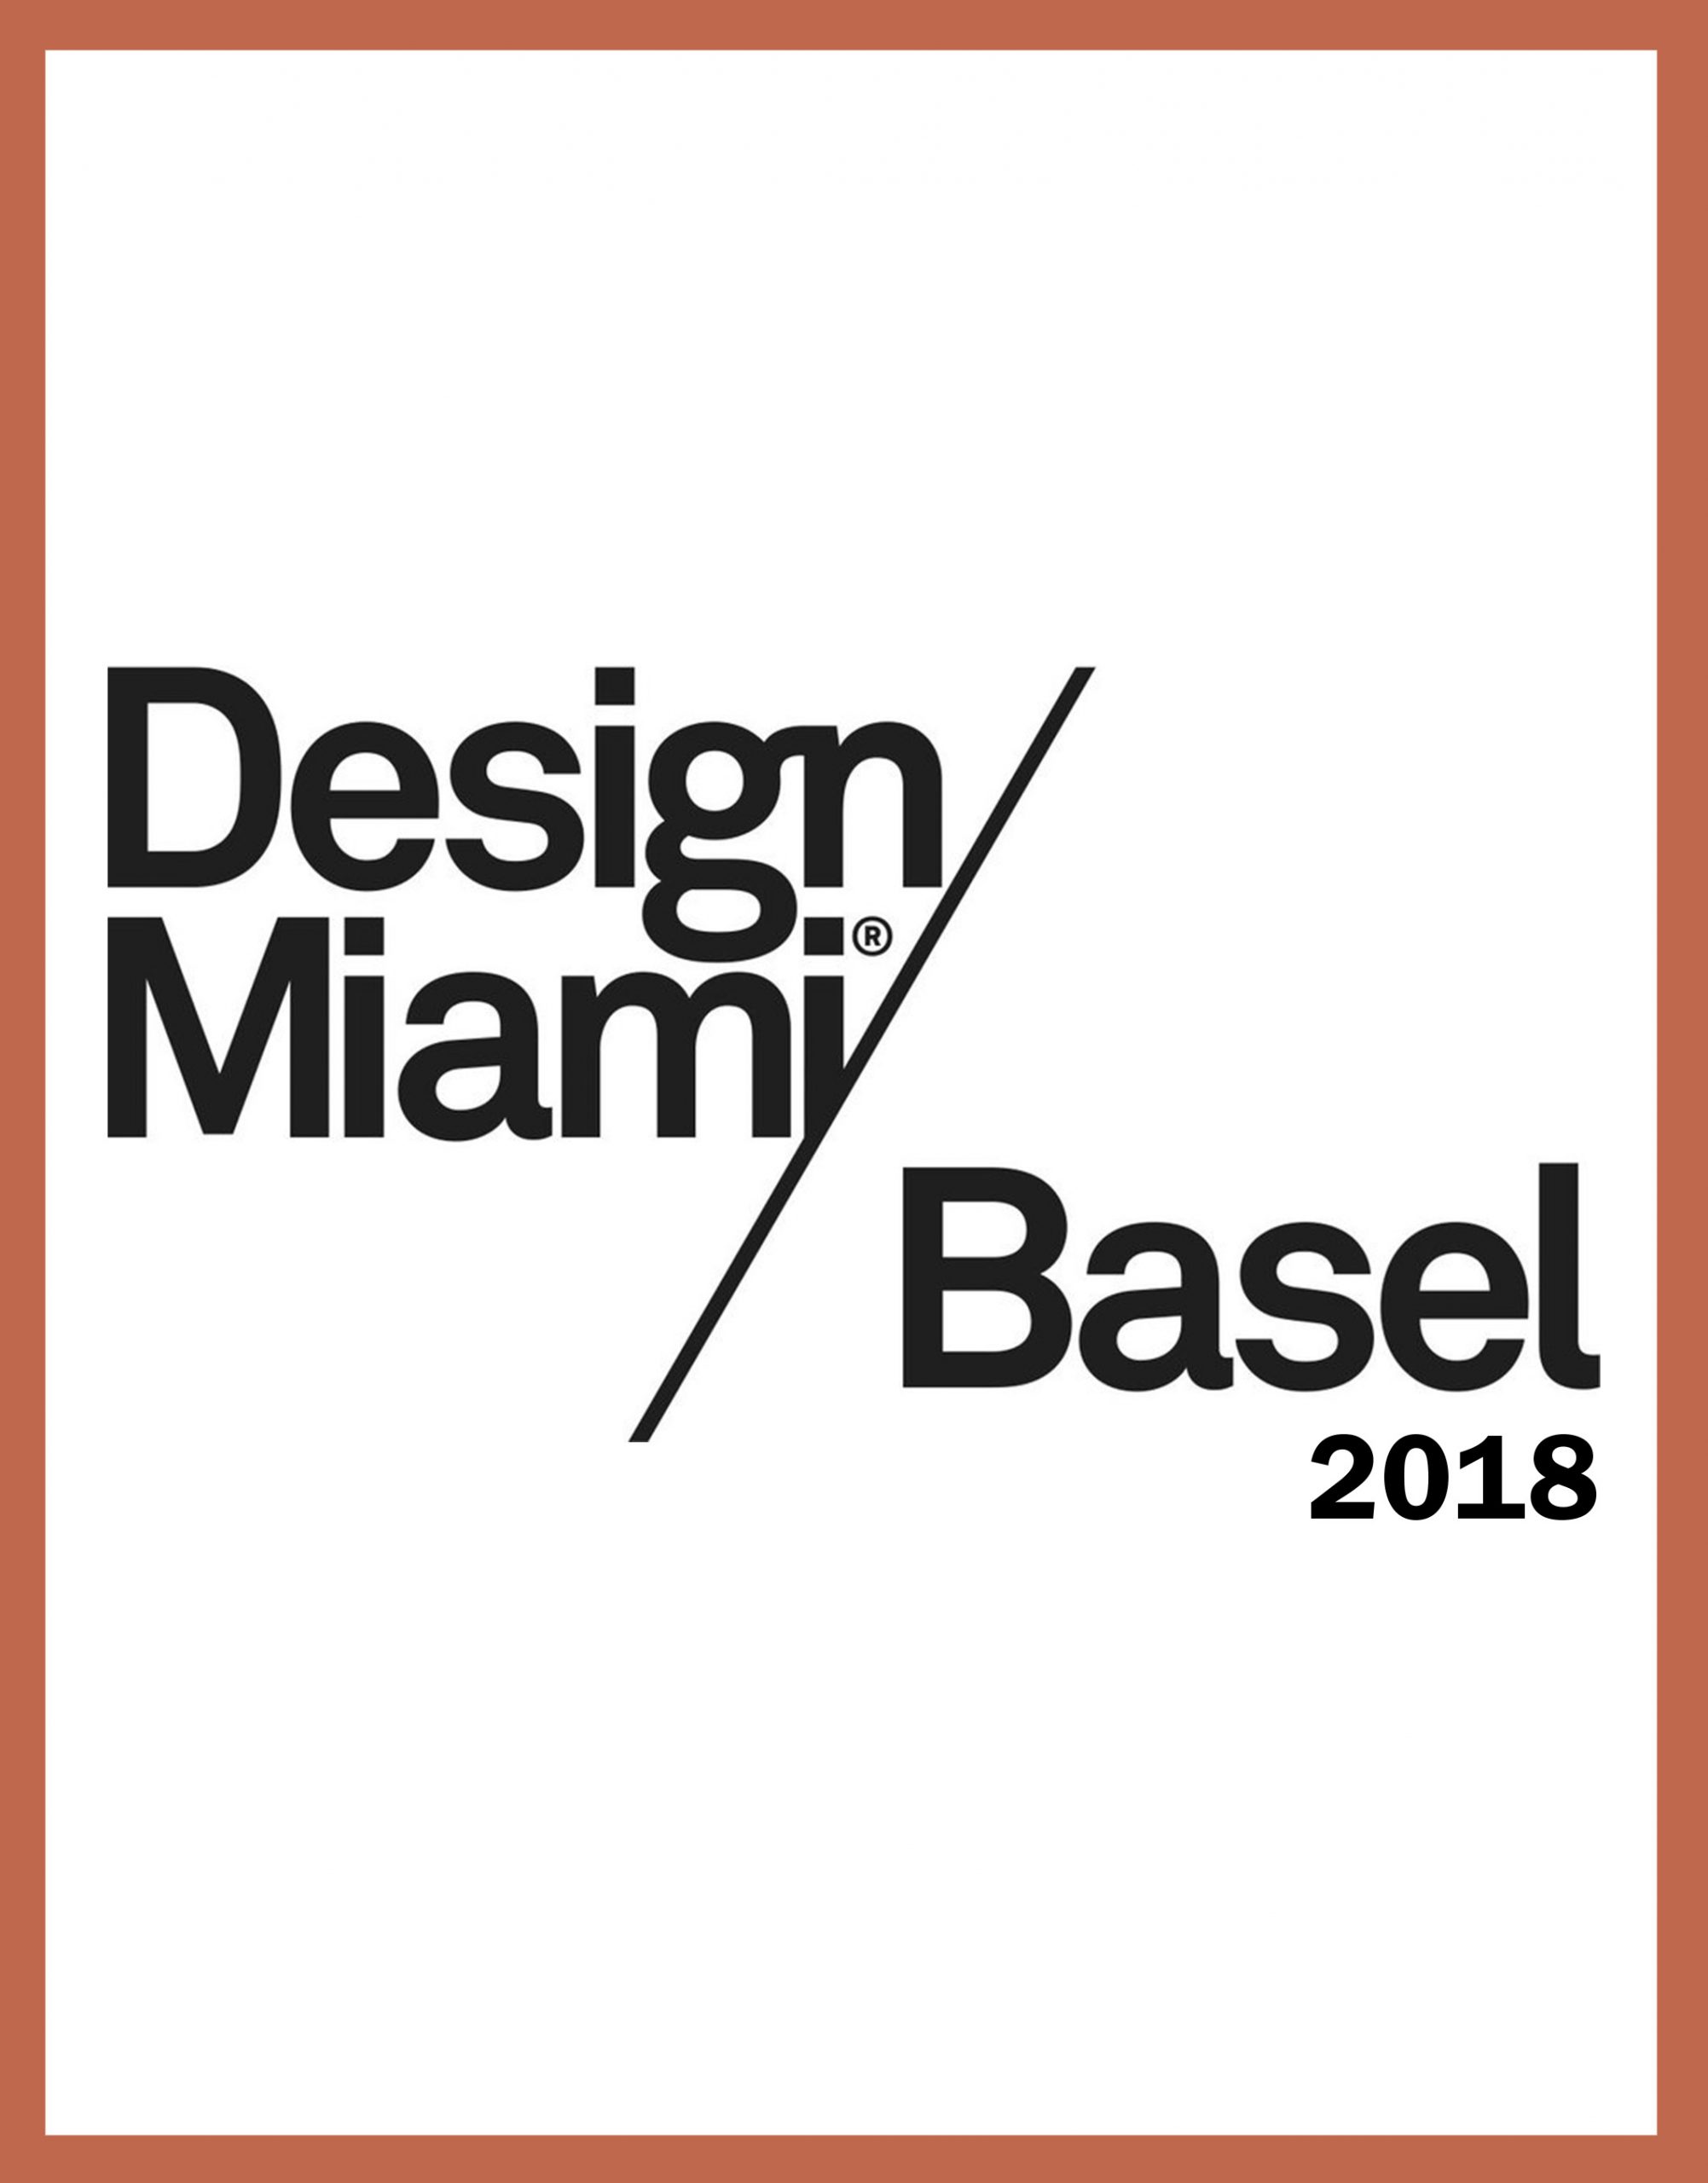 Konstantin Grcic - Design Miami / Basel 2018